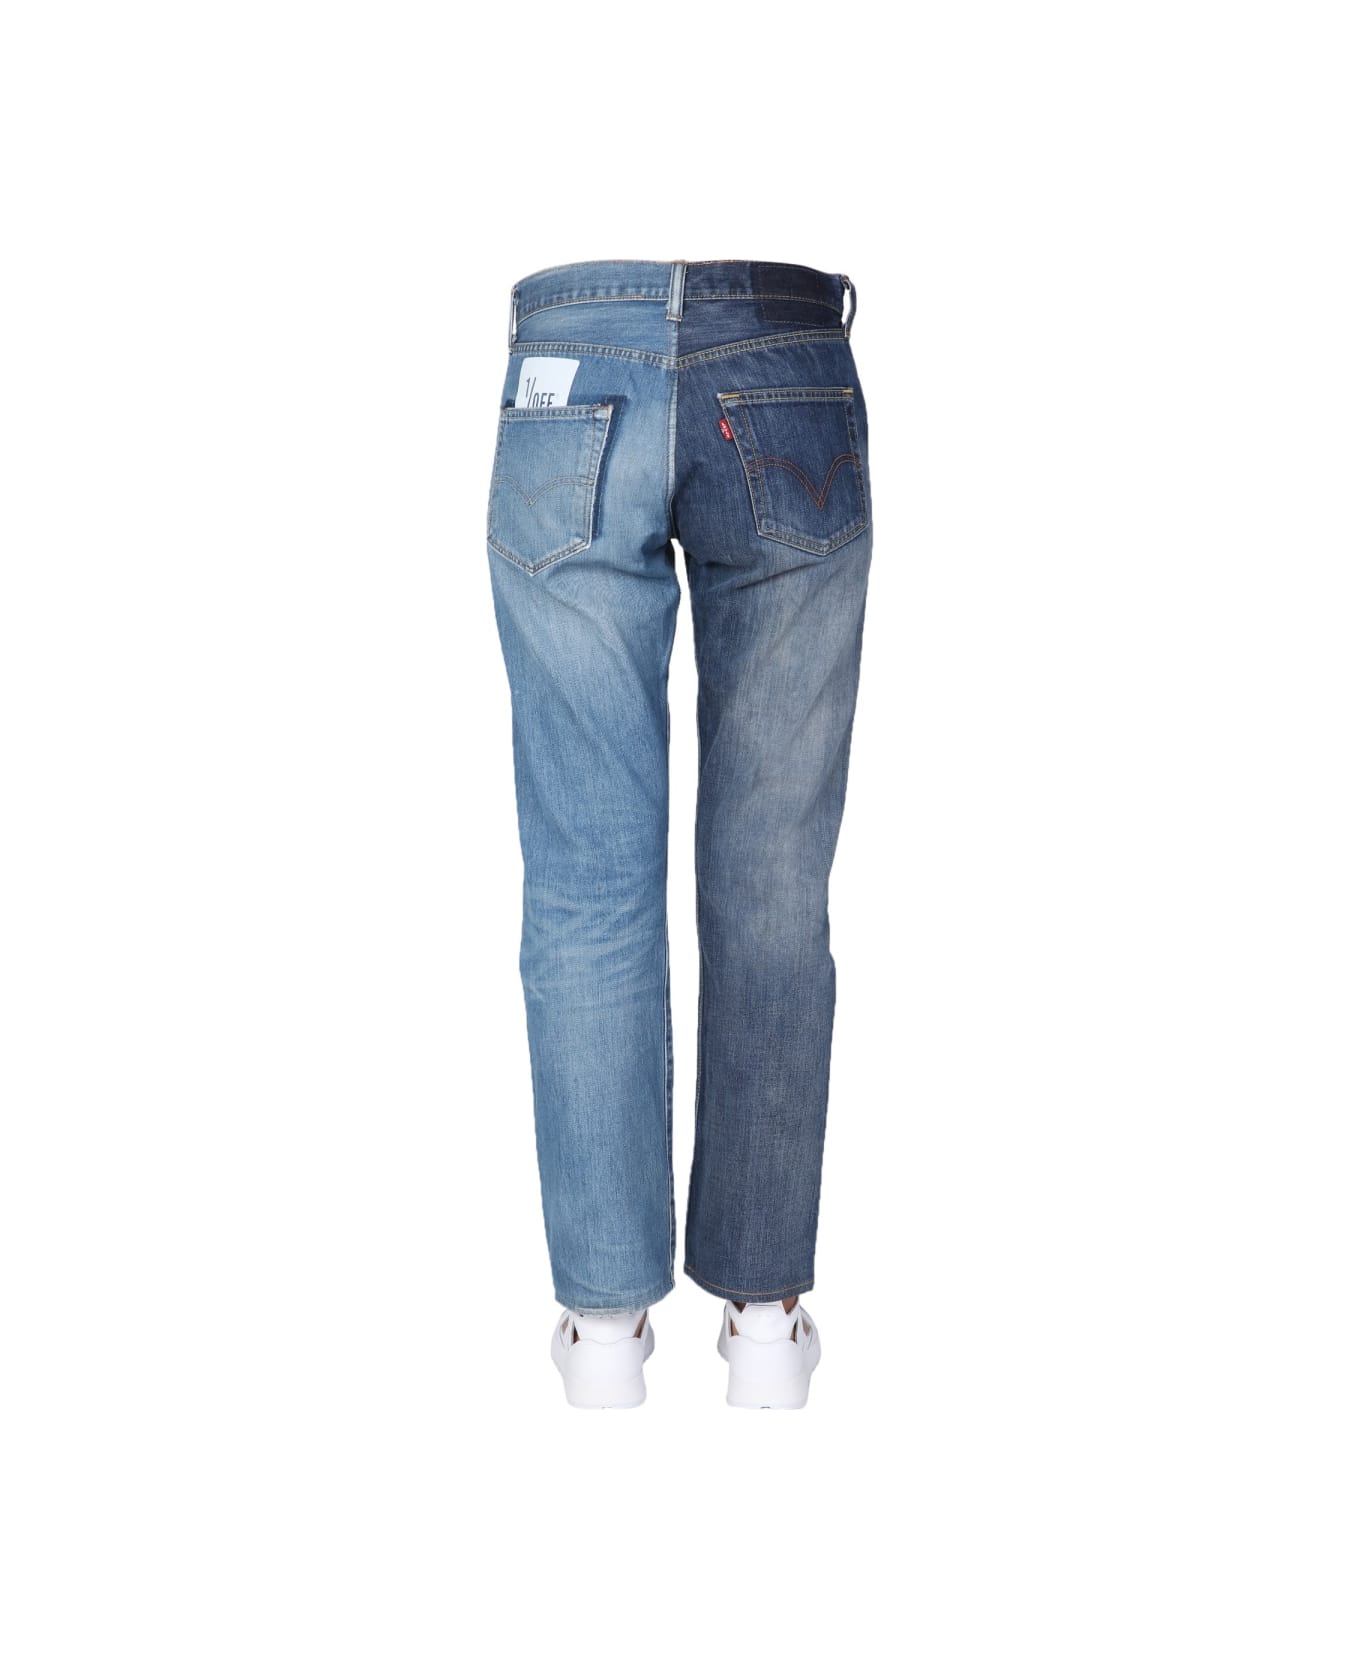 1/OFF 50/50 Jeans - MULTICOLOUR